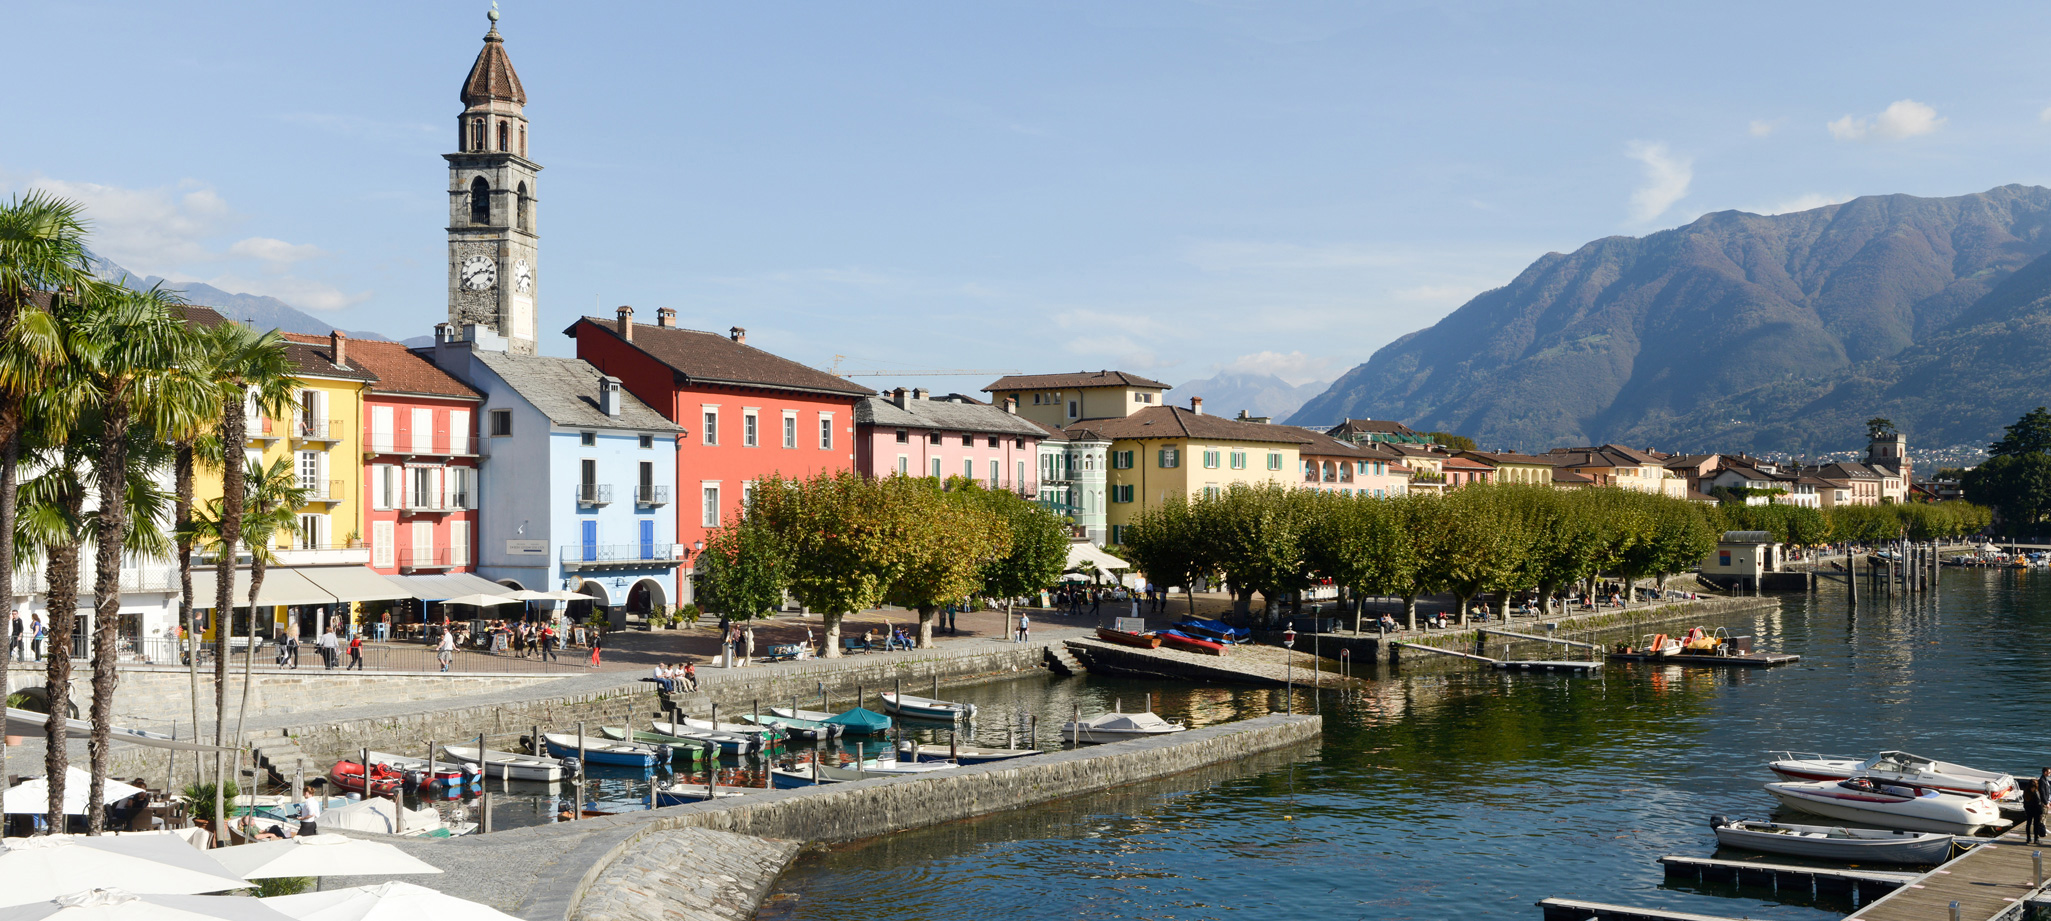 Willkommen in  Locarno Ascona Lugano. Willkommen in  Locarno Ascona Lugano Unsere Boutiques und Cafés